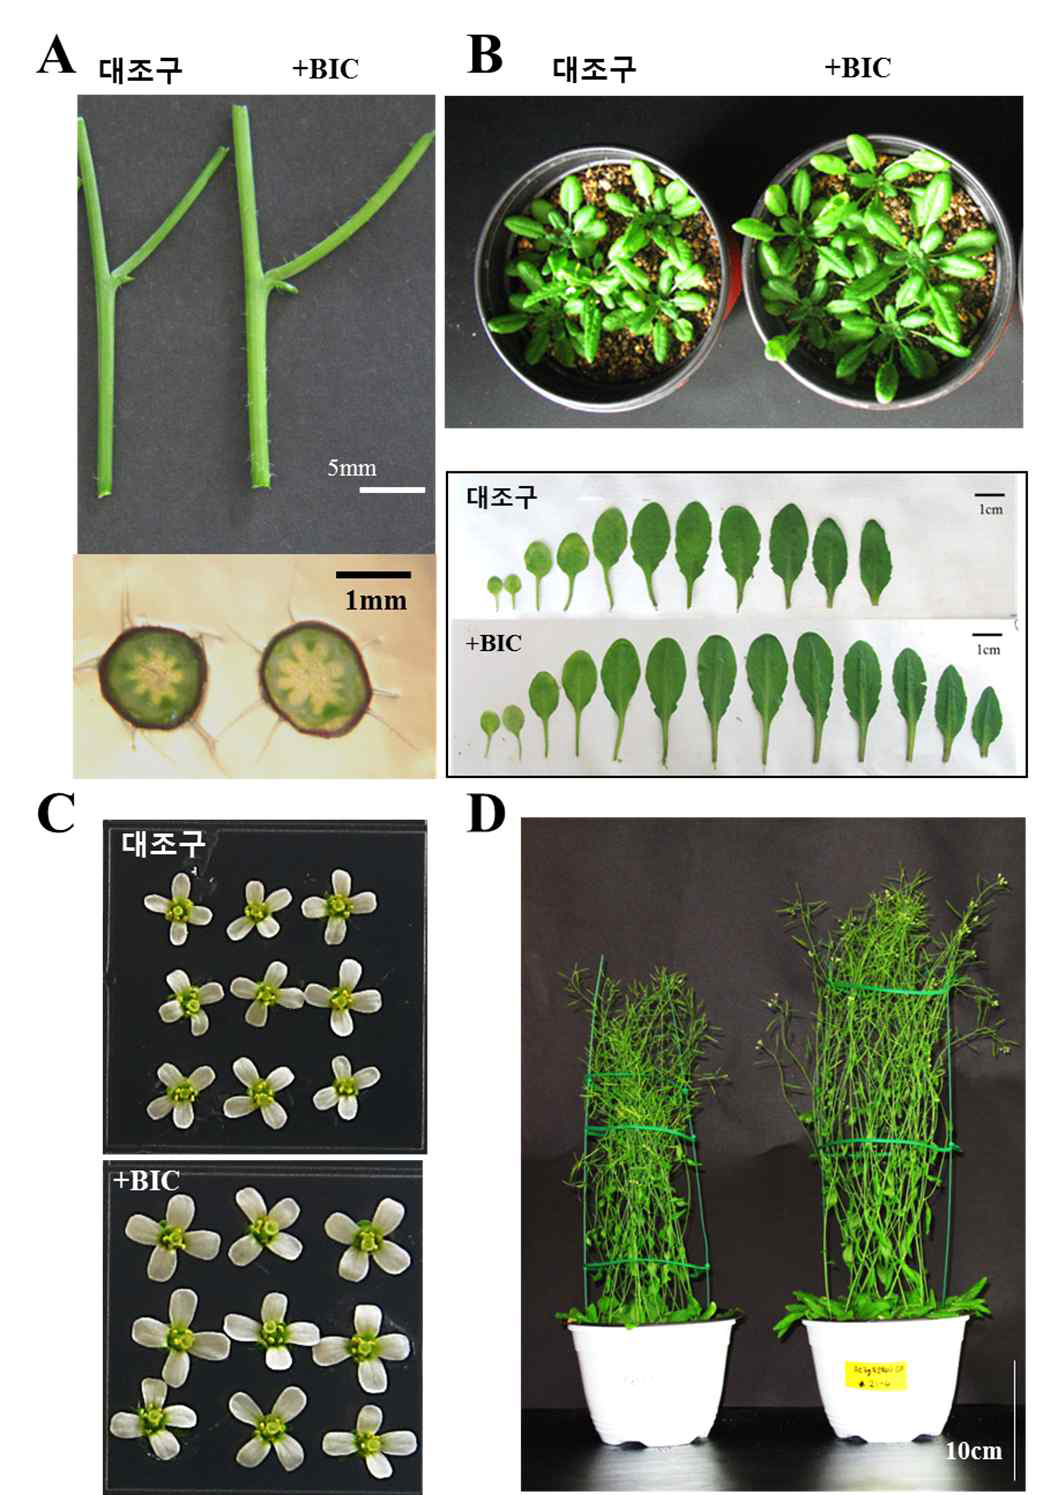 BIC 과발현 식물체의 표현형 분석 결과. (A) 줄기 두께 비교 사진. (B)　배양 중인 식물체의 크기 (위), 개화기의 잎 수 및 크기 비교 사진 (아래). (C) 꽃 크기 비교 사진. (D) 성숙 식물체의 크기 비교 사진. 전반적으로 BIC 유전자가 도입된 식물체가 크다는 것을 확인할 수 있다